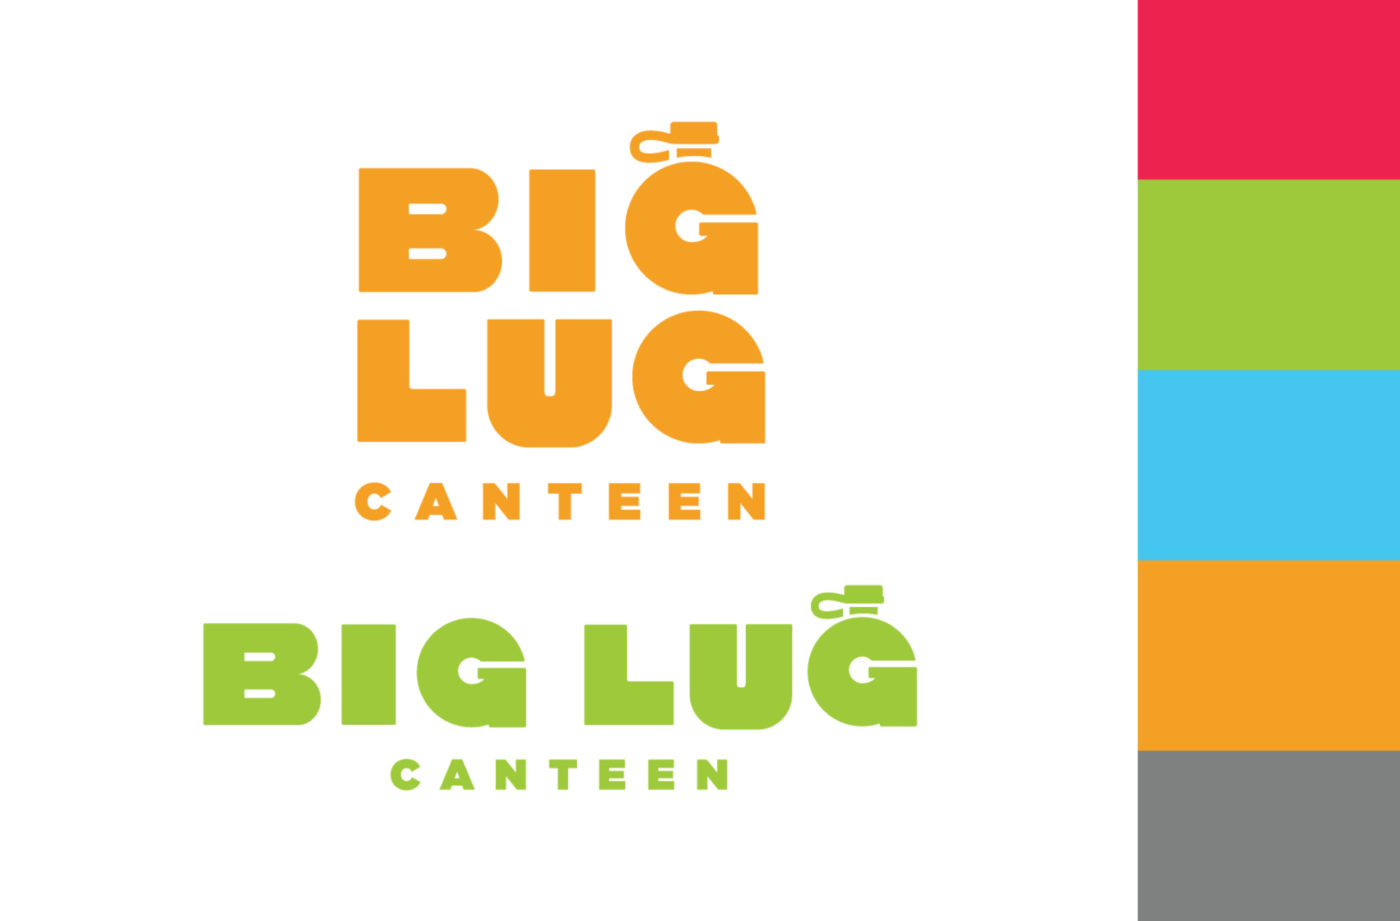 Big Lug Canteen Branding by CODO Design.